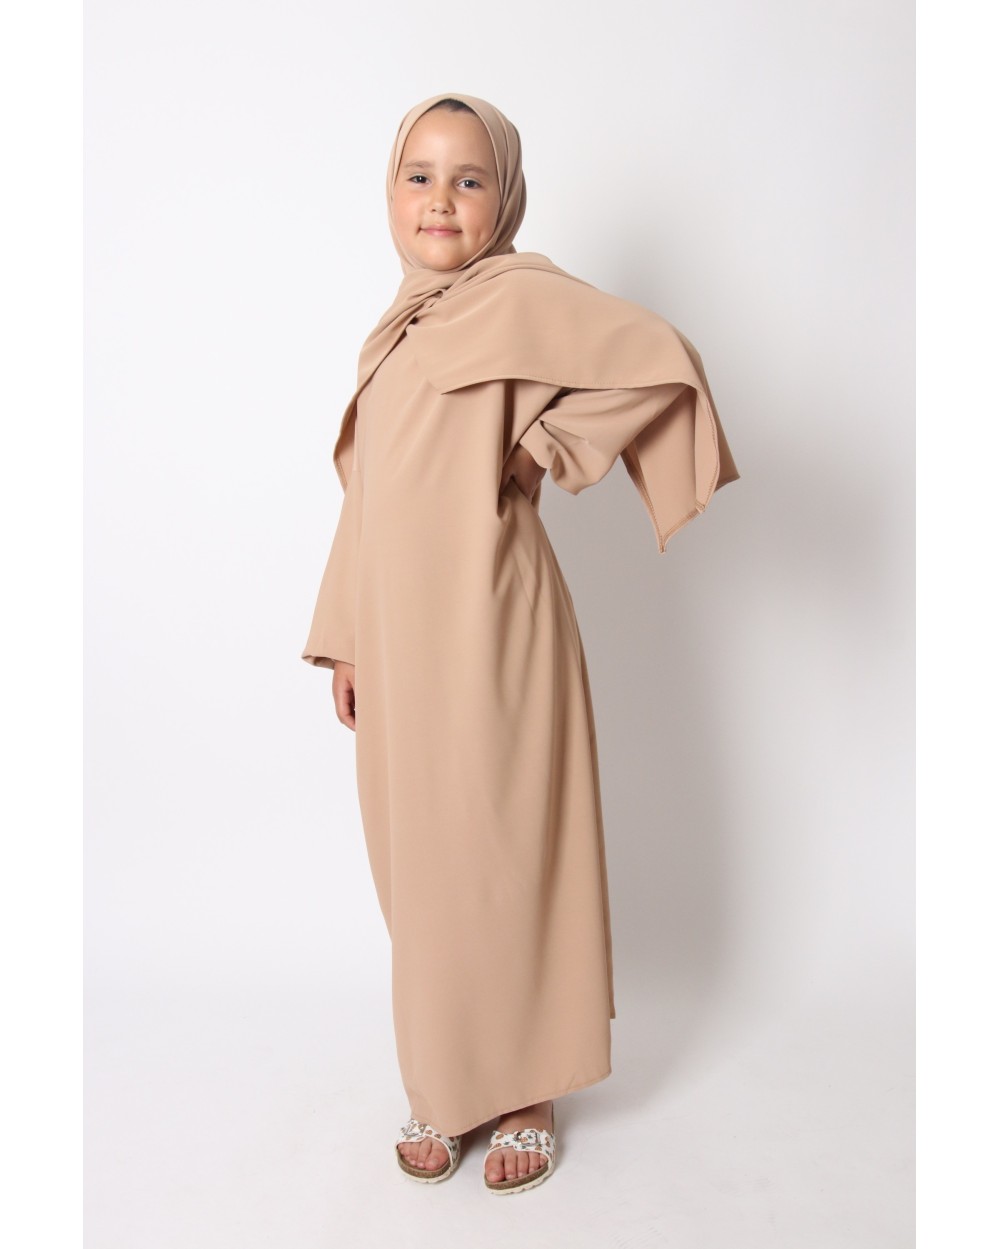 Binti integrated hijab butterfly abaya